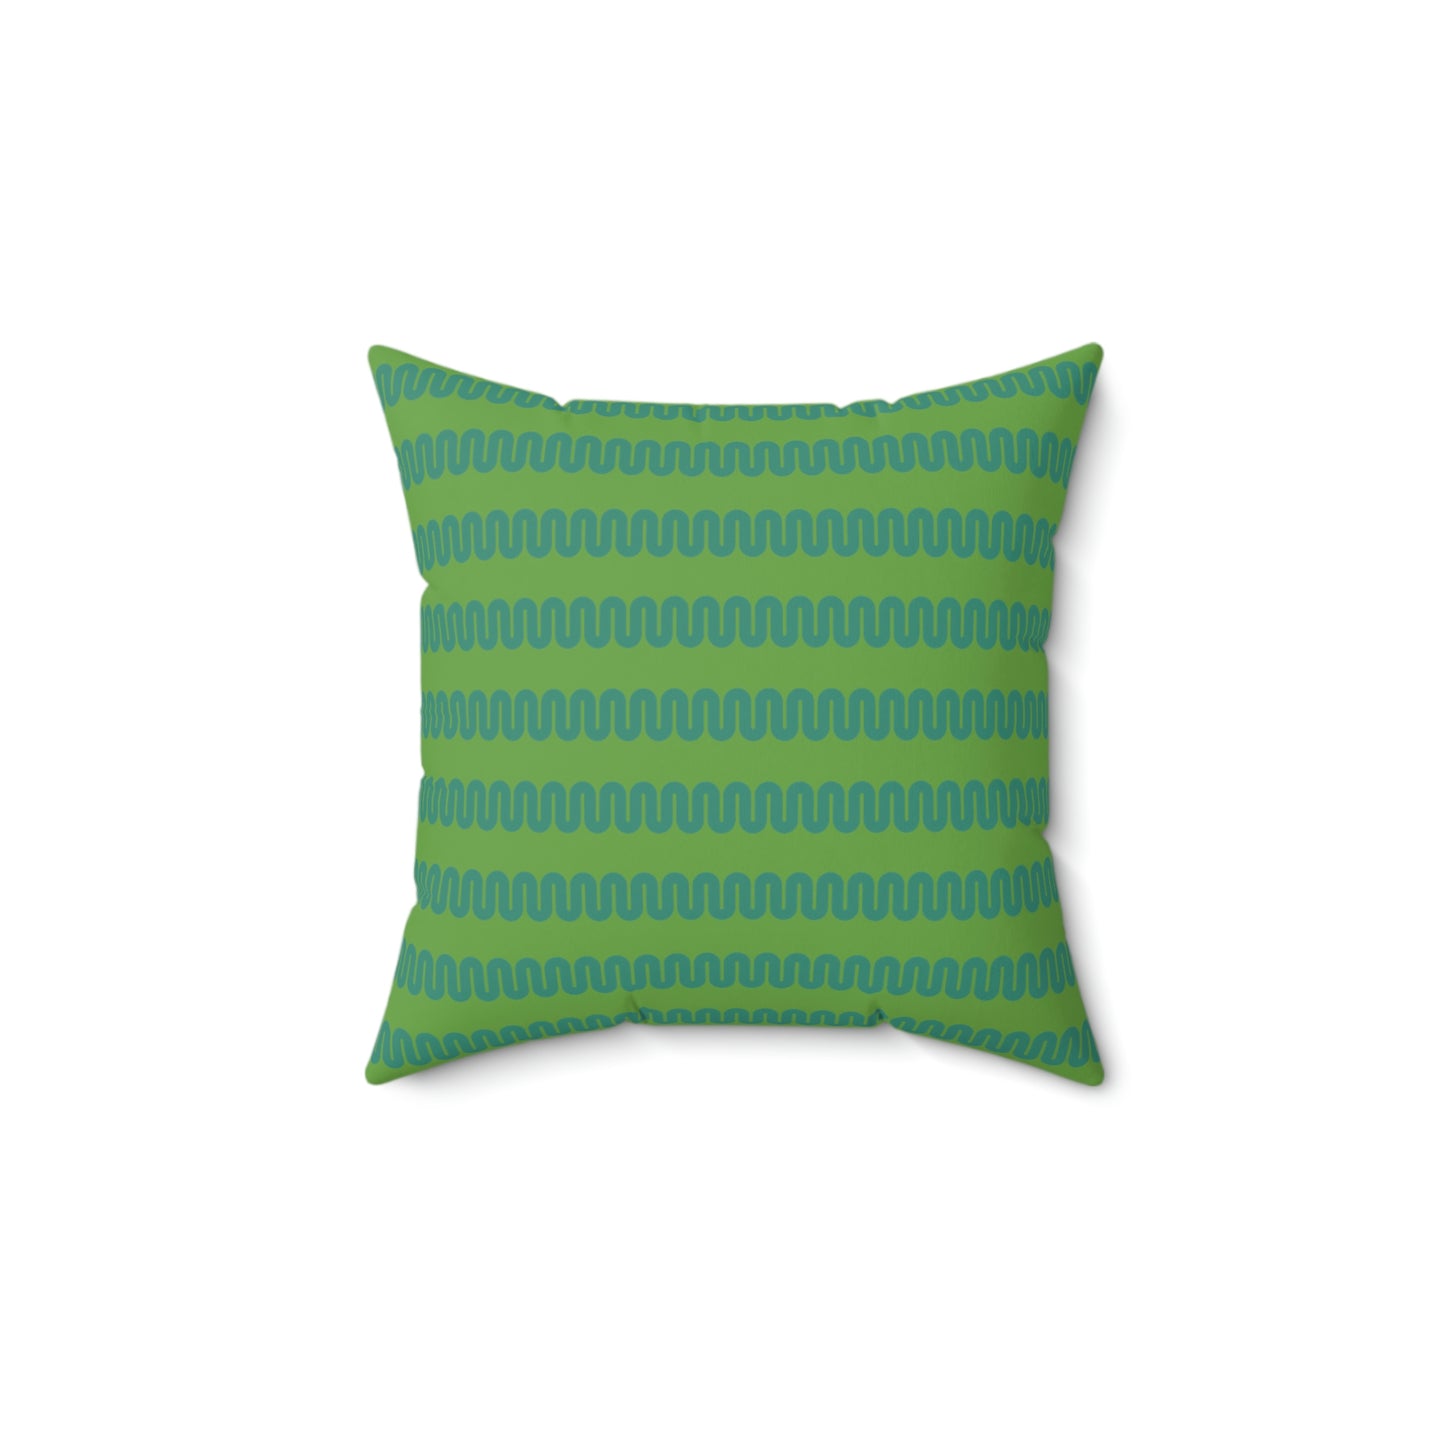 Spun Polyester Square Pillow Case “Snake Line on Green”